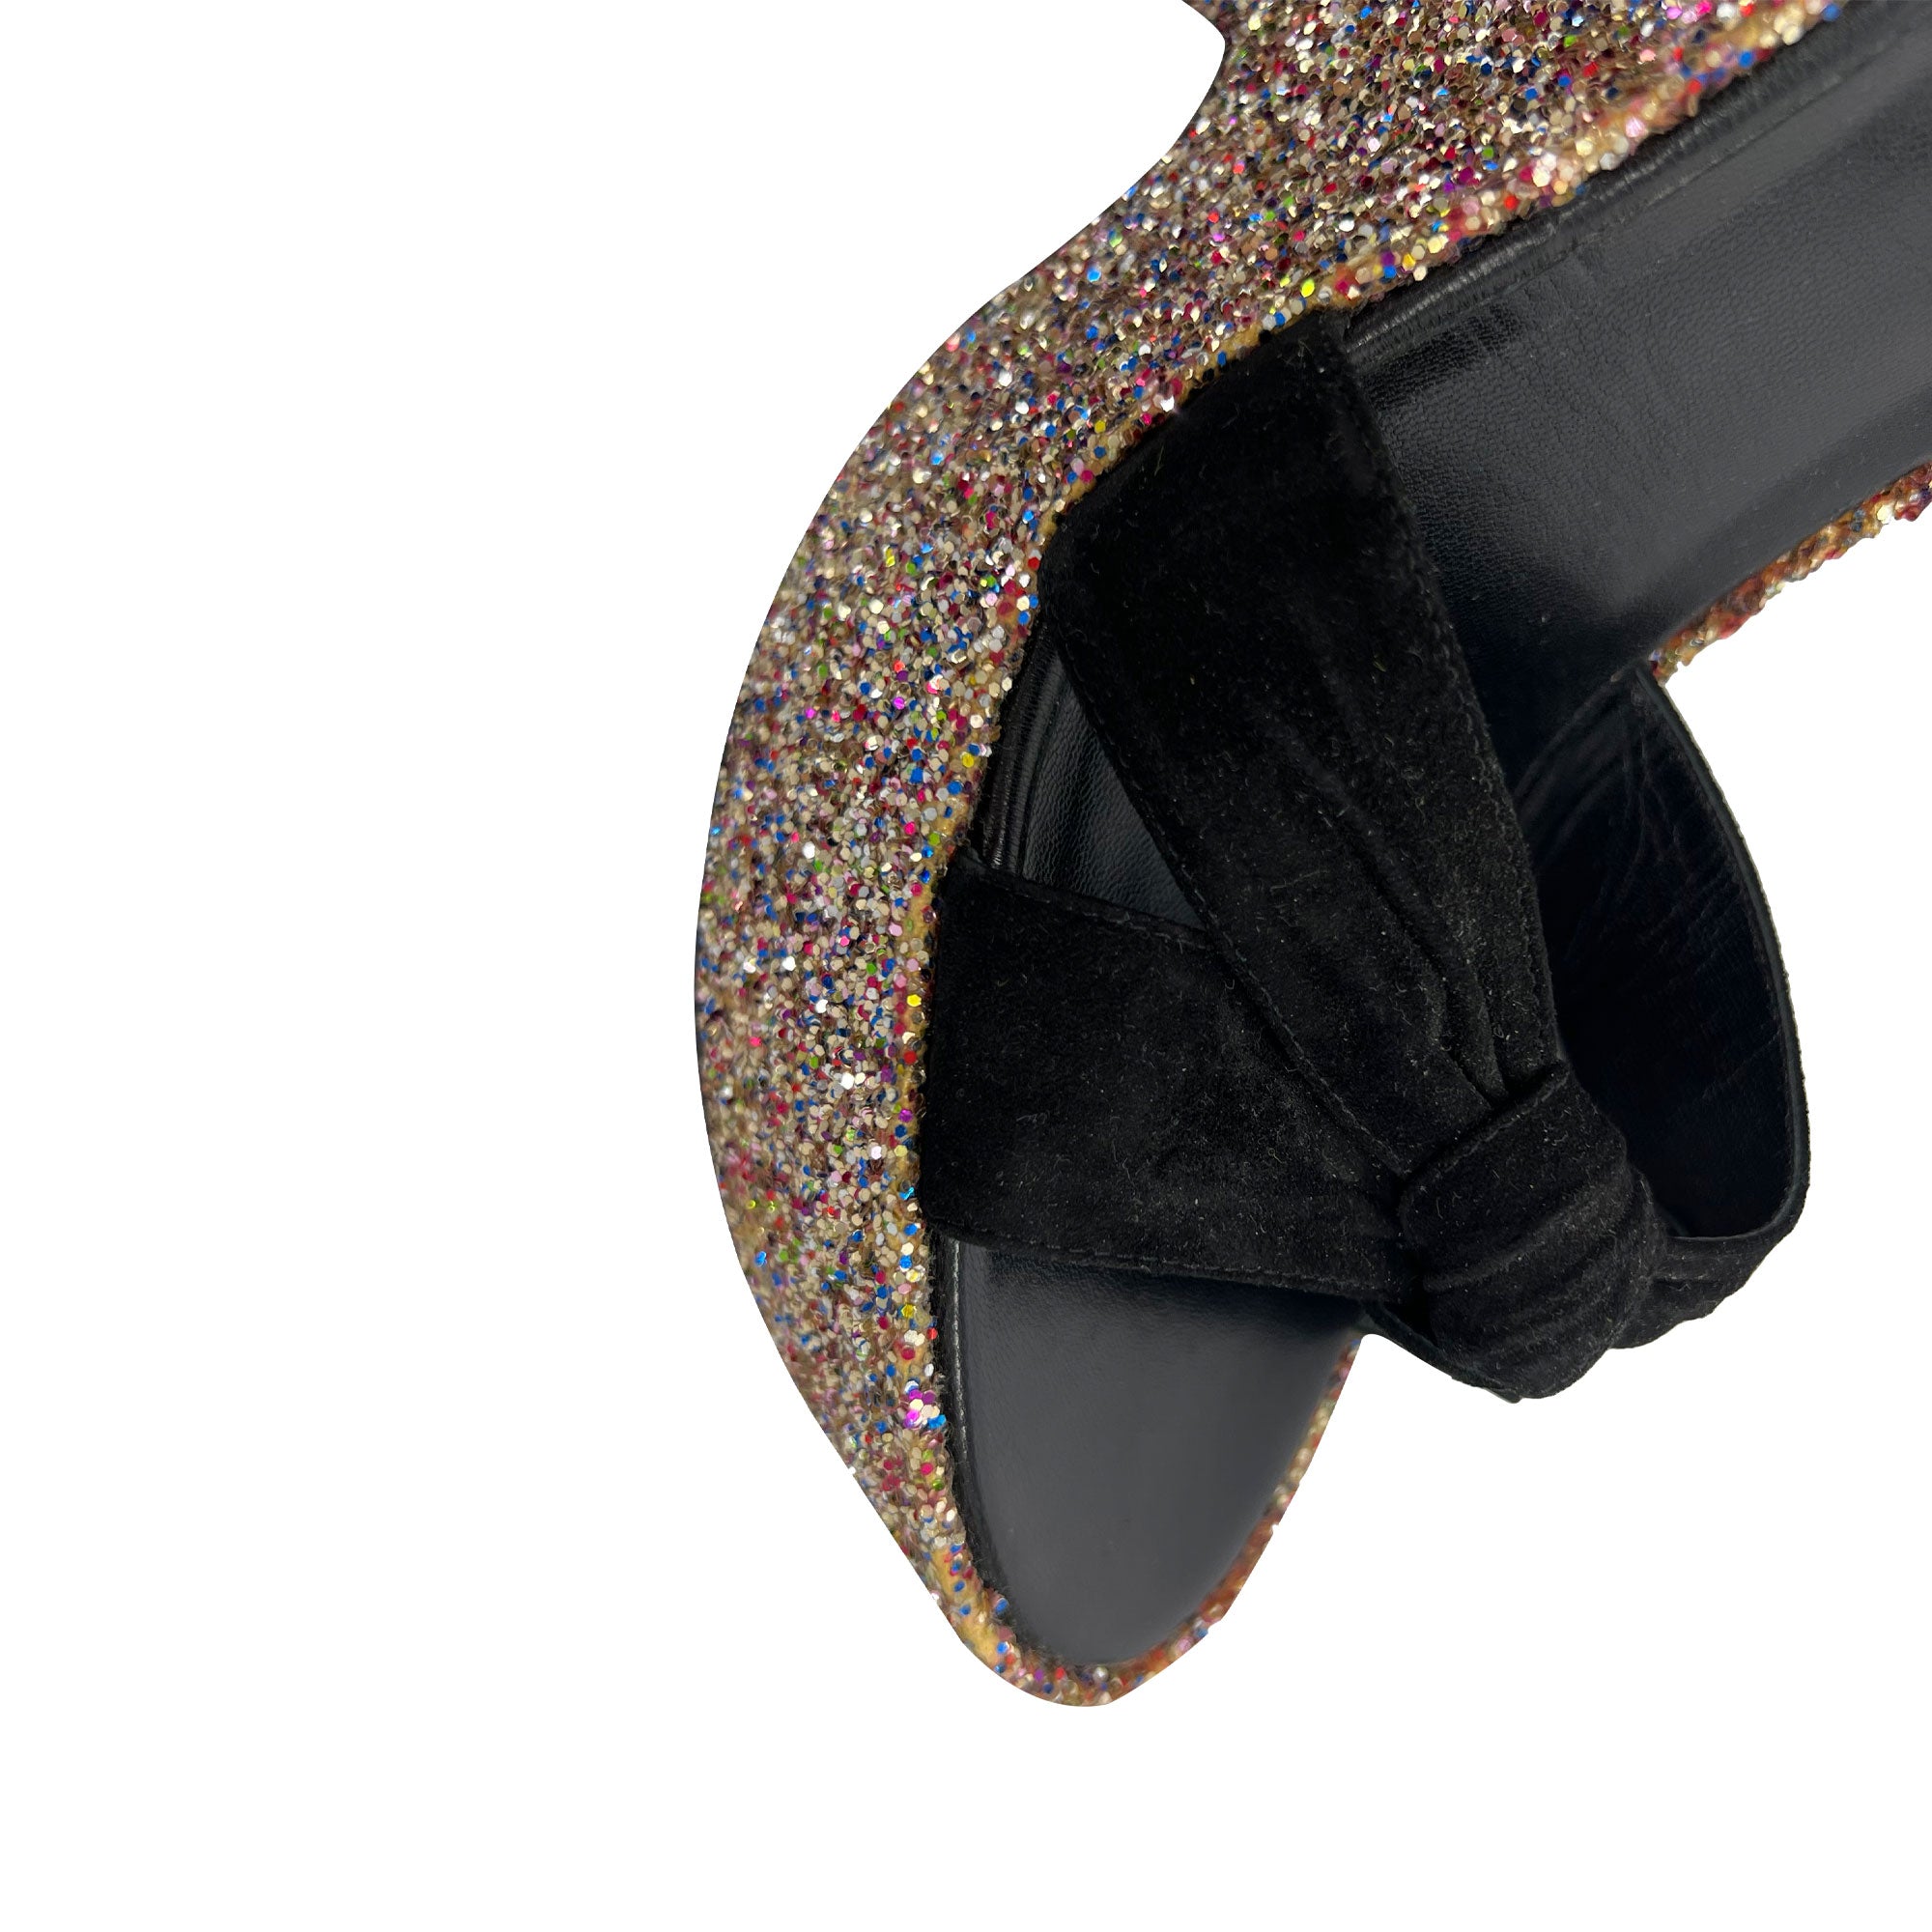 Yves Saint Laurent black suede leather platform wedge sandals